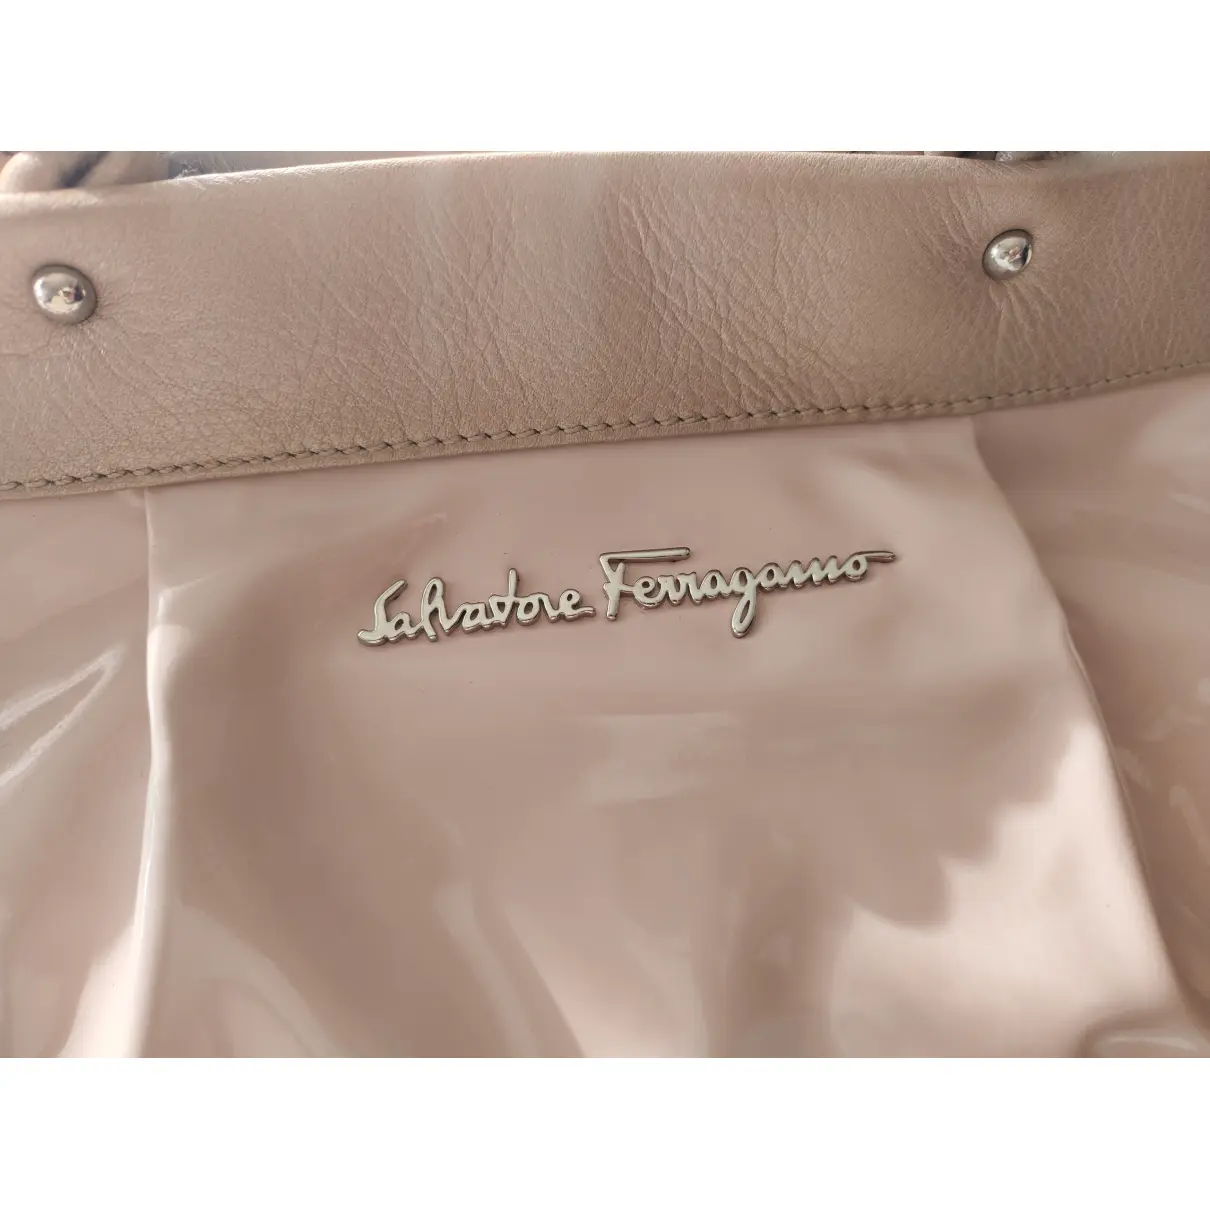 Wanda patent leather handbag Salvatore Ferragamo